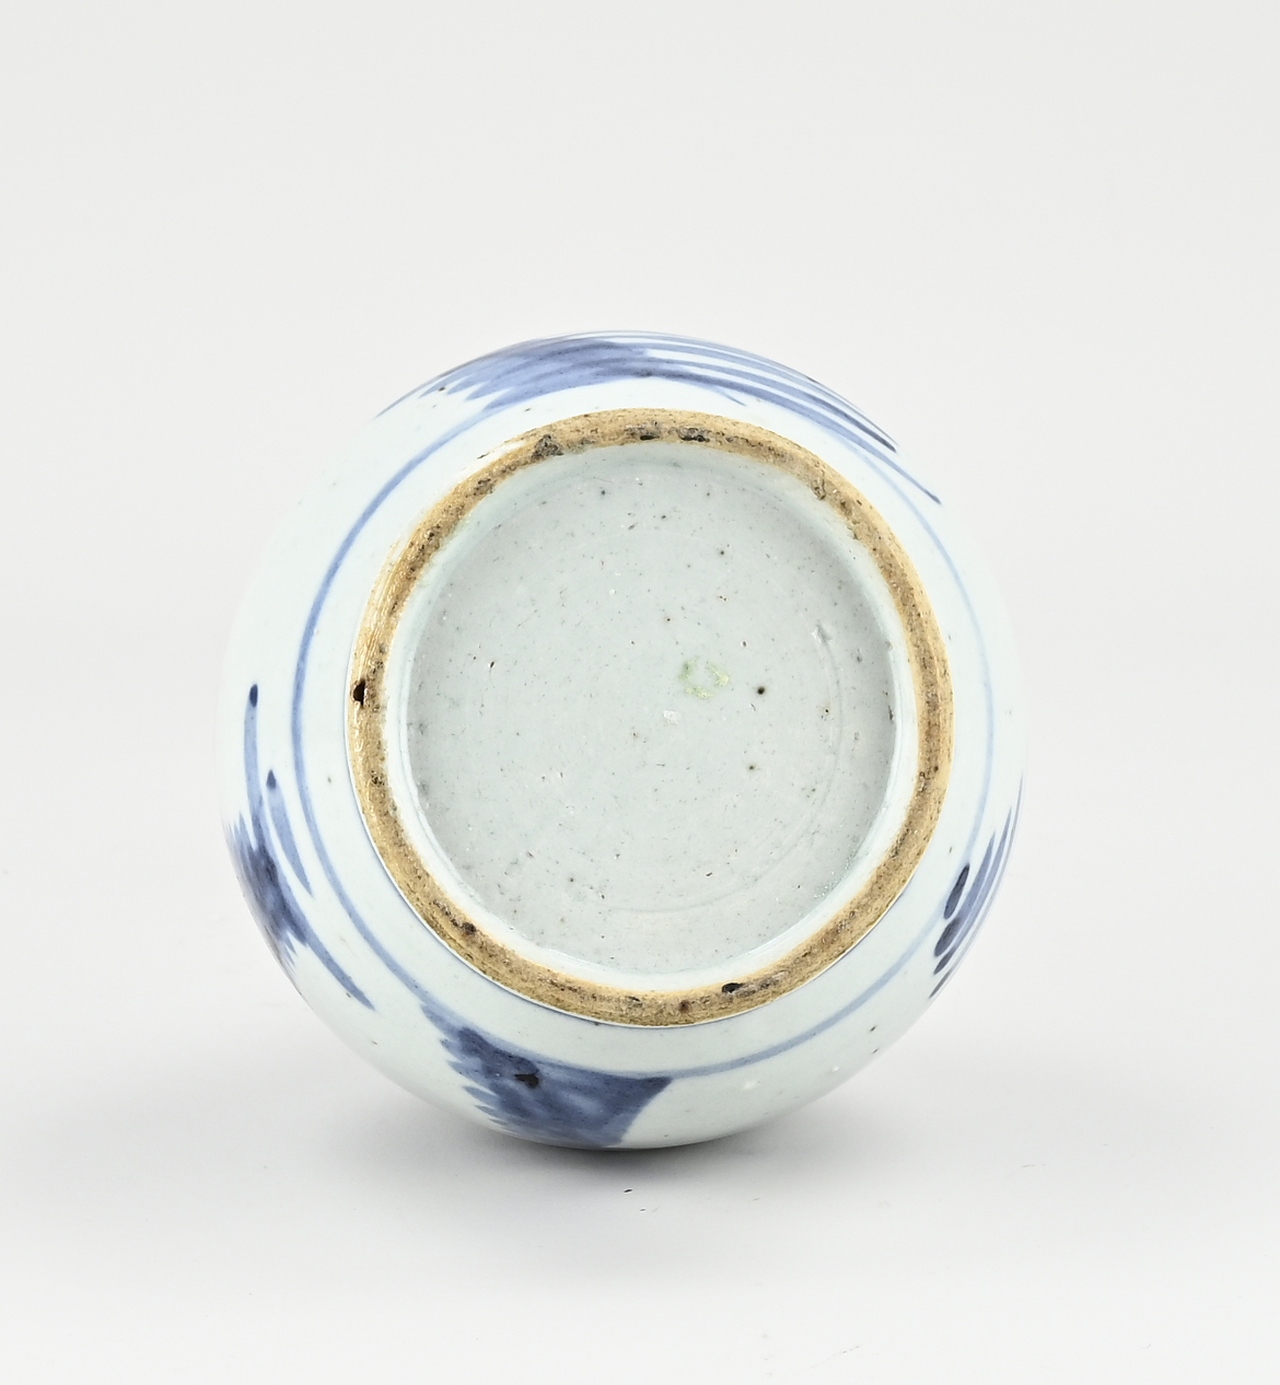 Chinese knob vase, H 21 cm. - Image 3 of 3